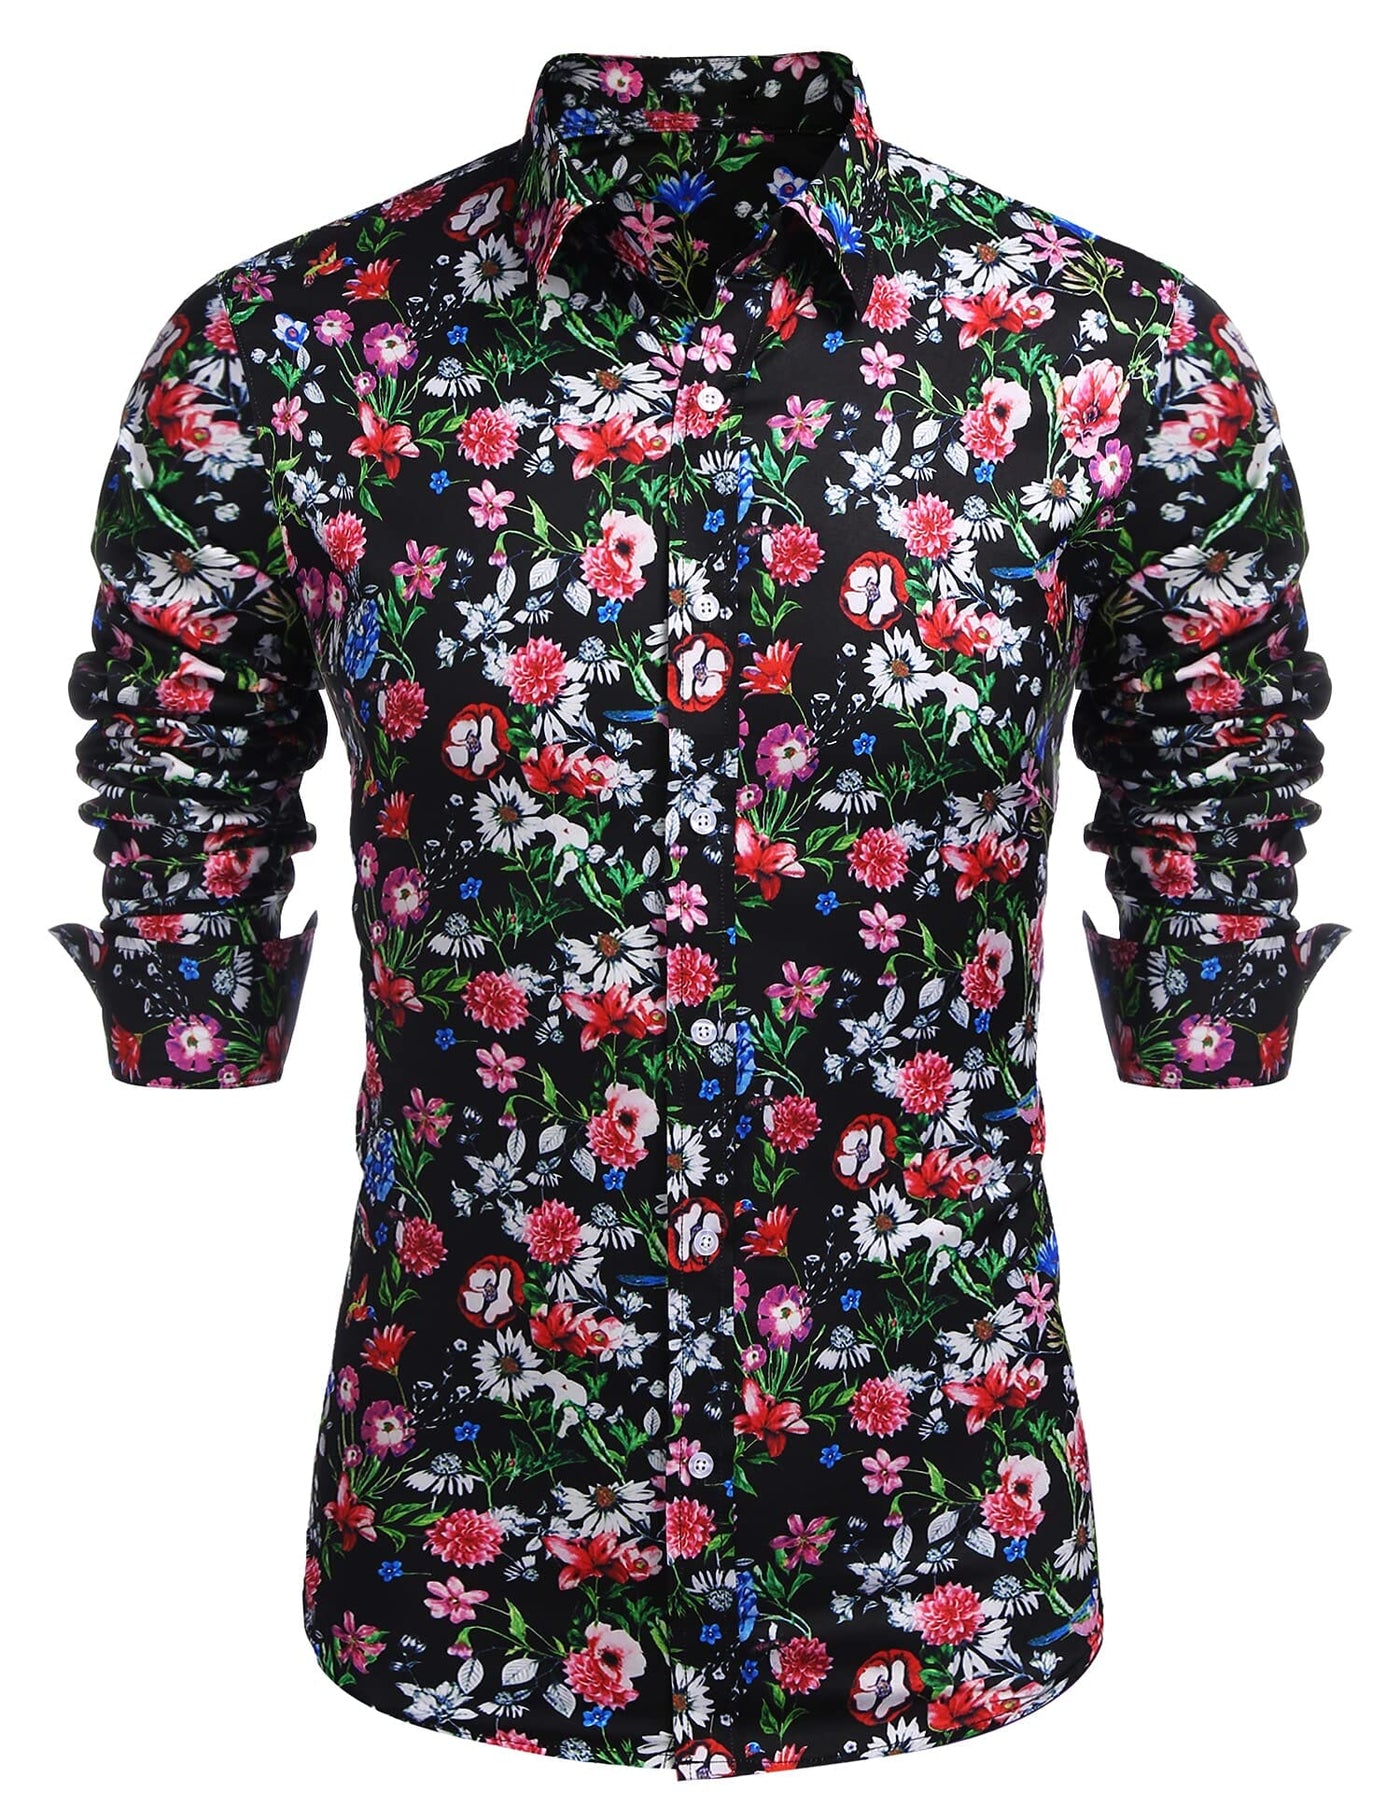 Floral Hawaiian Tropical Button Down Beach Shirt (US Only) Shirts coofandy Black Floral S 